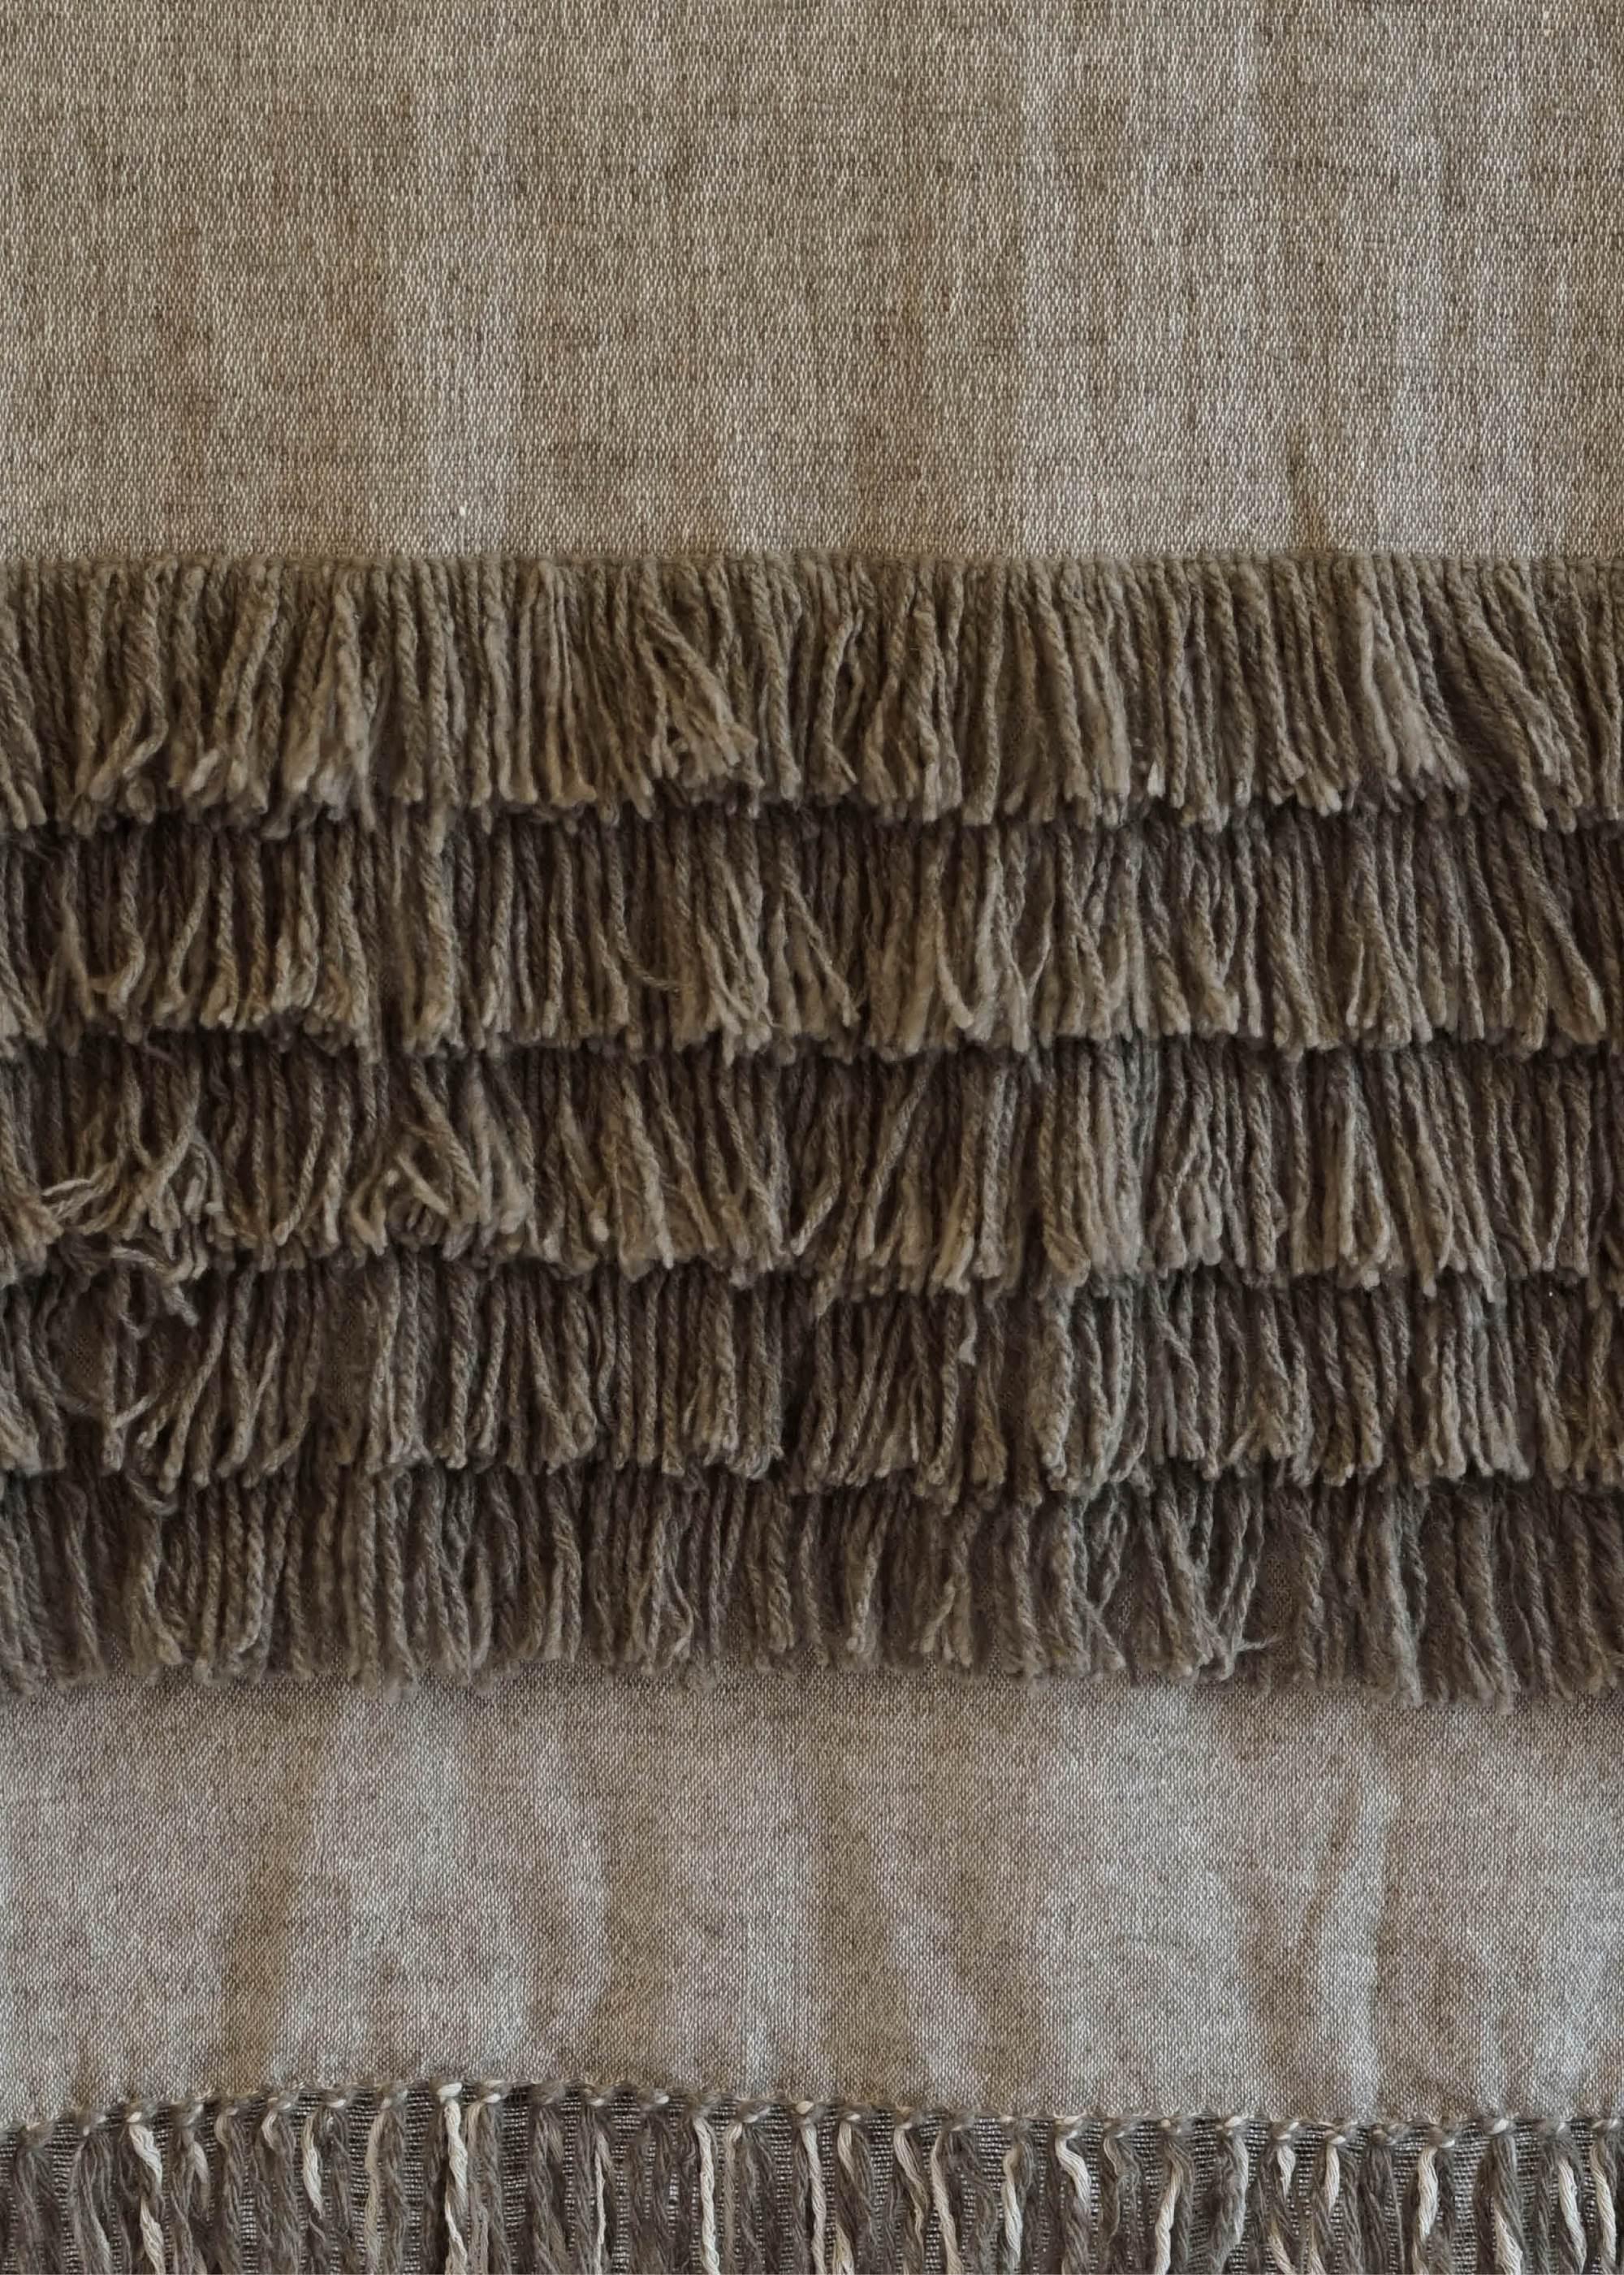 Modern Jaṅgalī by Chaccra, Himalayan Yak Khullu Wool, Nepal Inspired Handcrafted Blanket For Sale